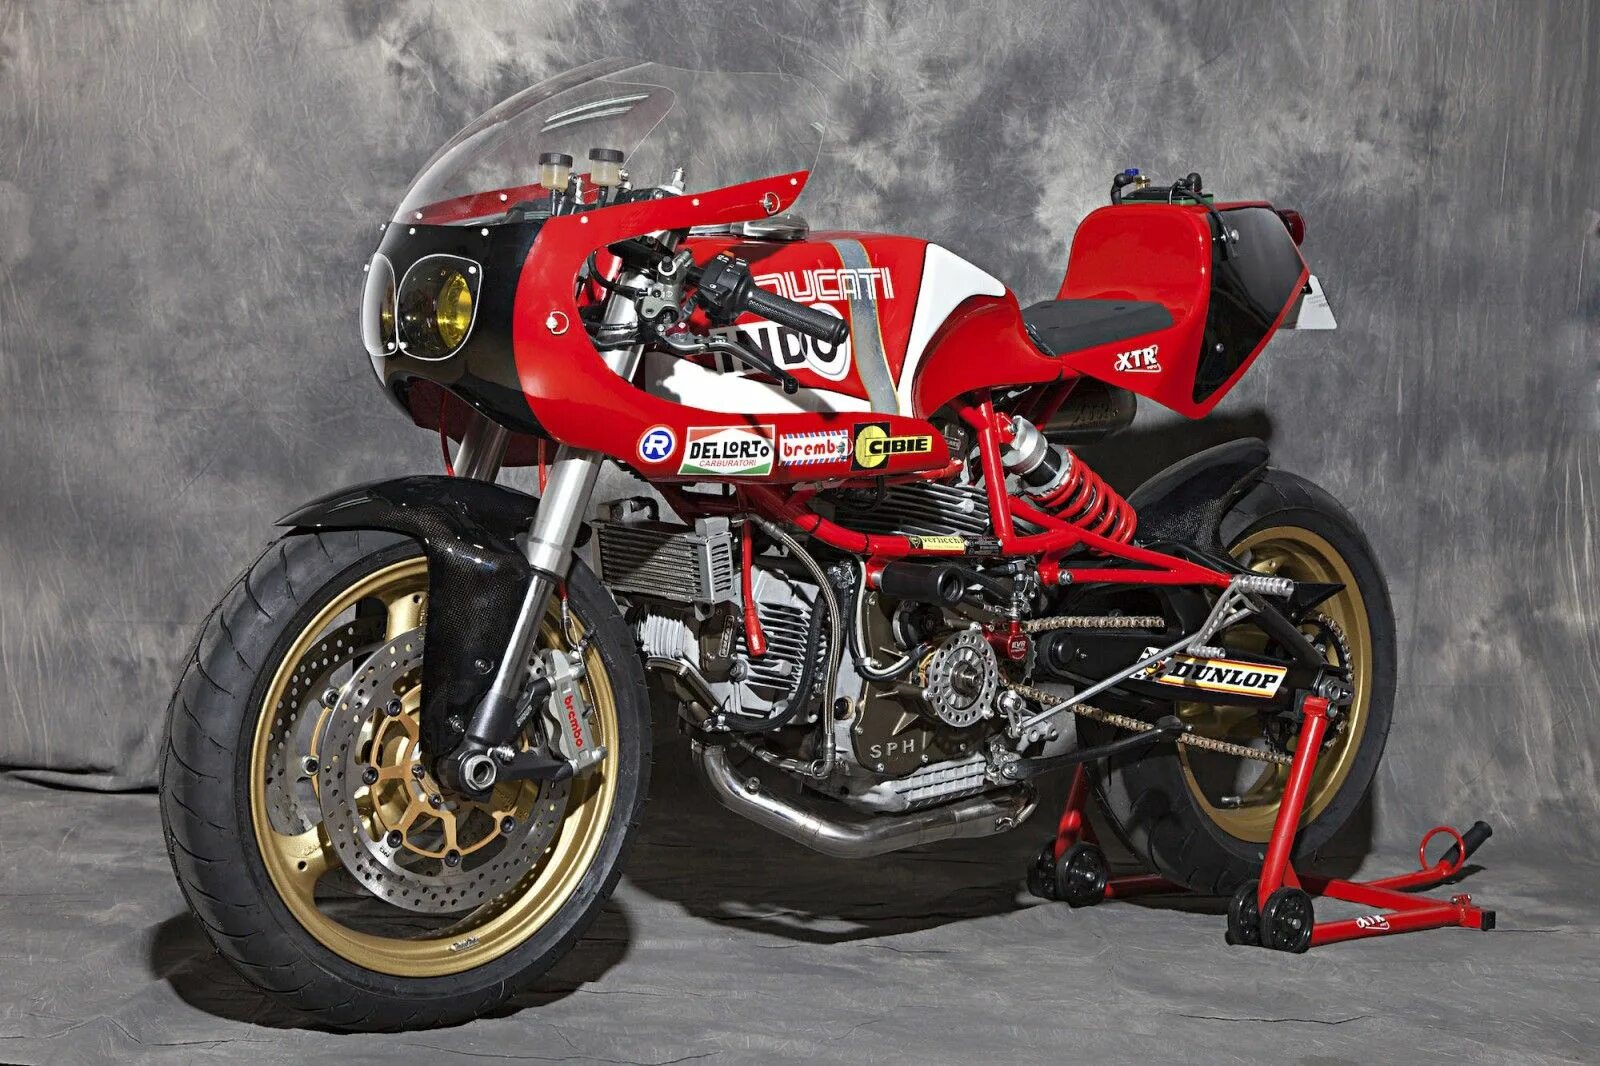 Ducati 600 TL. Гоночный мотоцикл Дукати. Дукати мотоцикл чоппер. Мотоцикл Дукати кастом. Байк х 75 машина